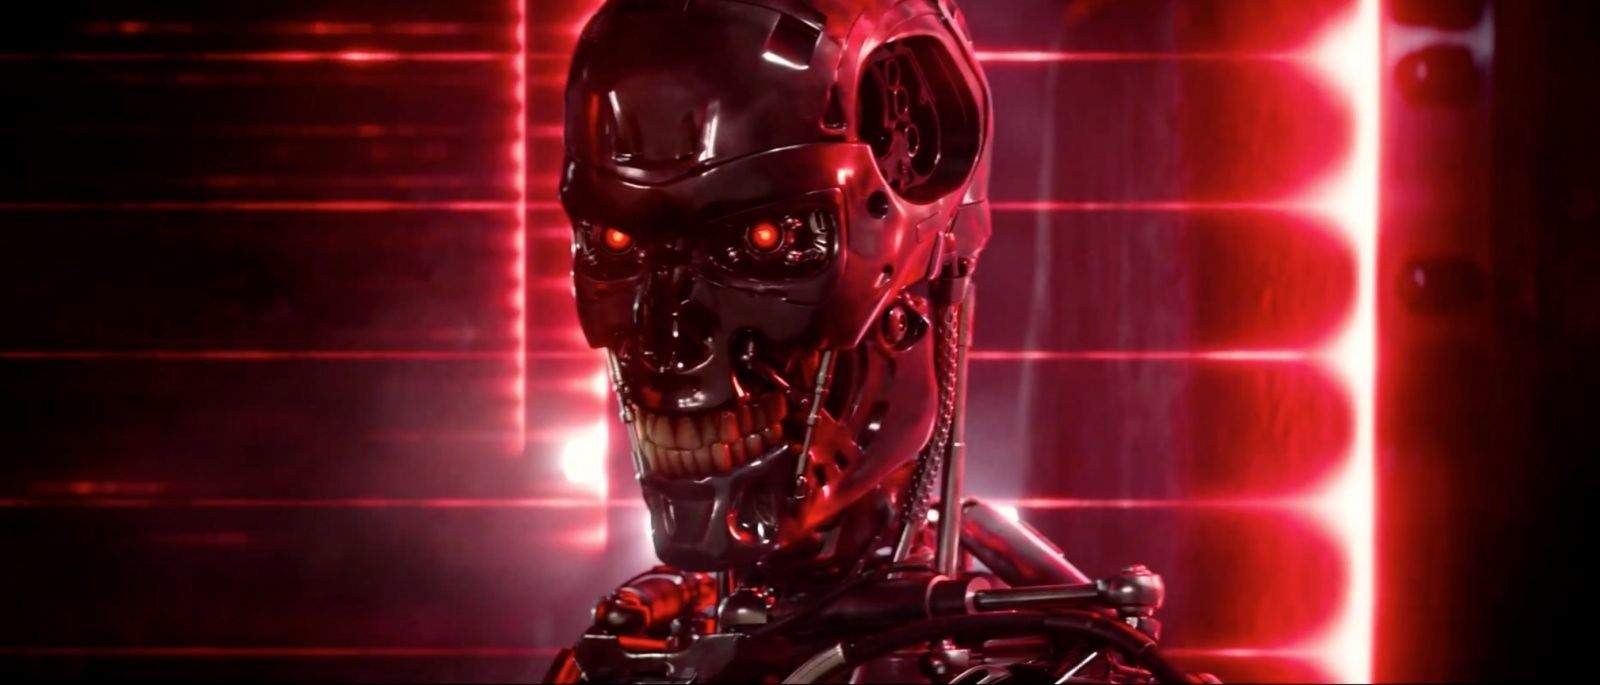 New Terminator trailer brings